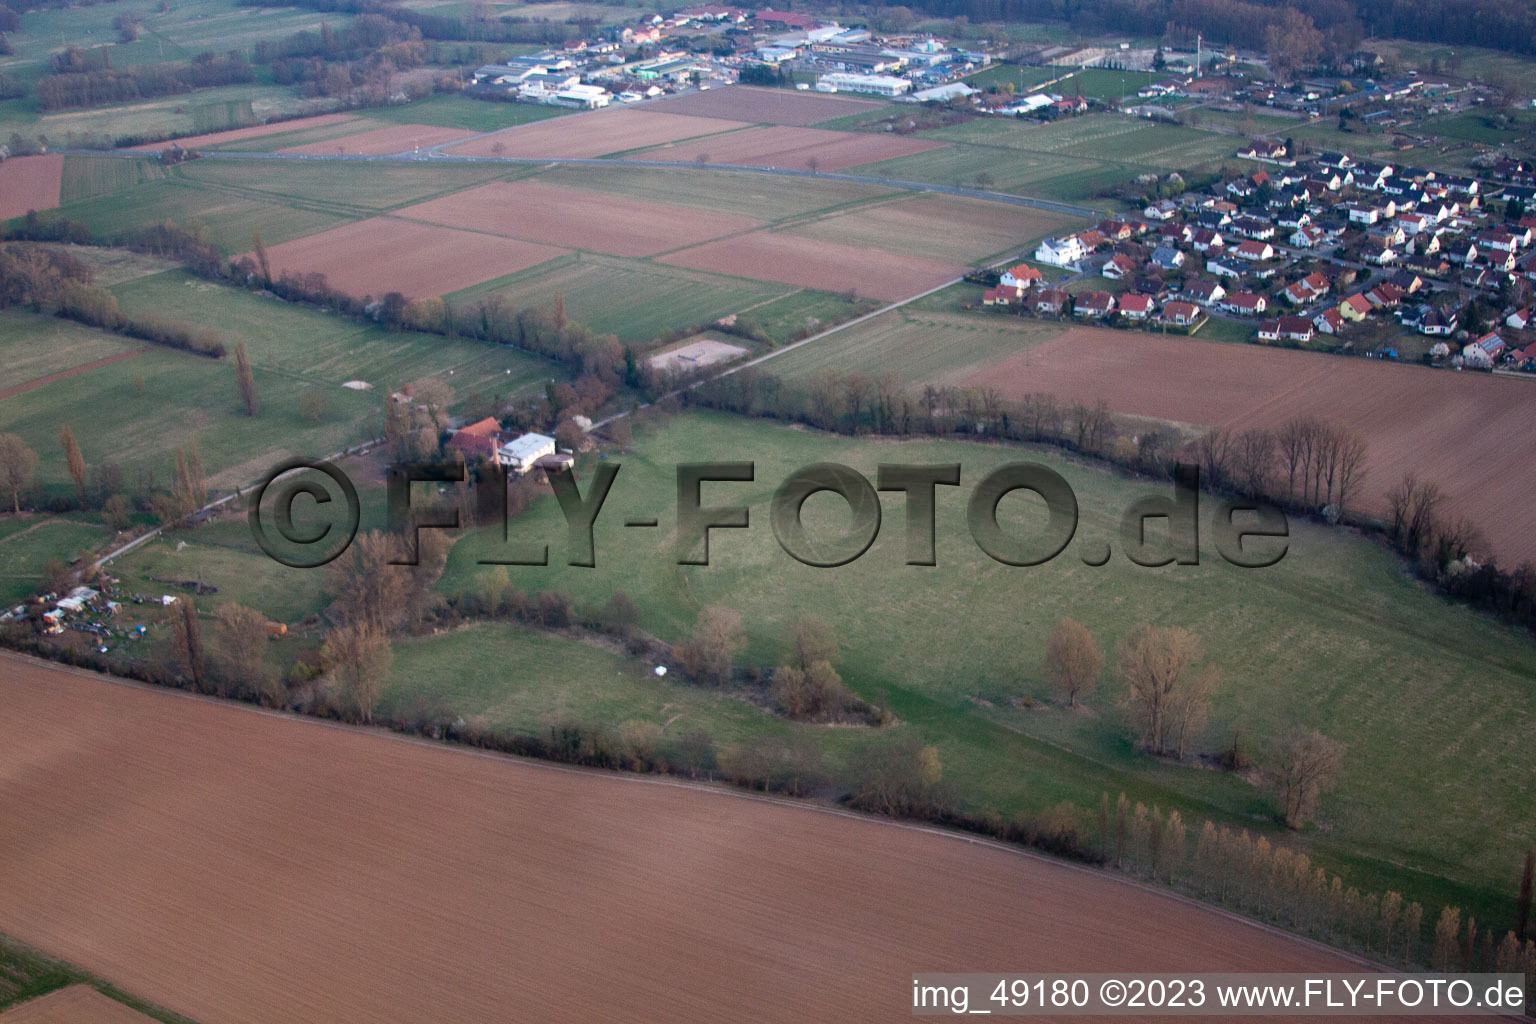 Racetrack in the district Billigheim in Billigheim-Ingenheim in the state Rhineland-Palatinate, Germany from above